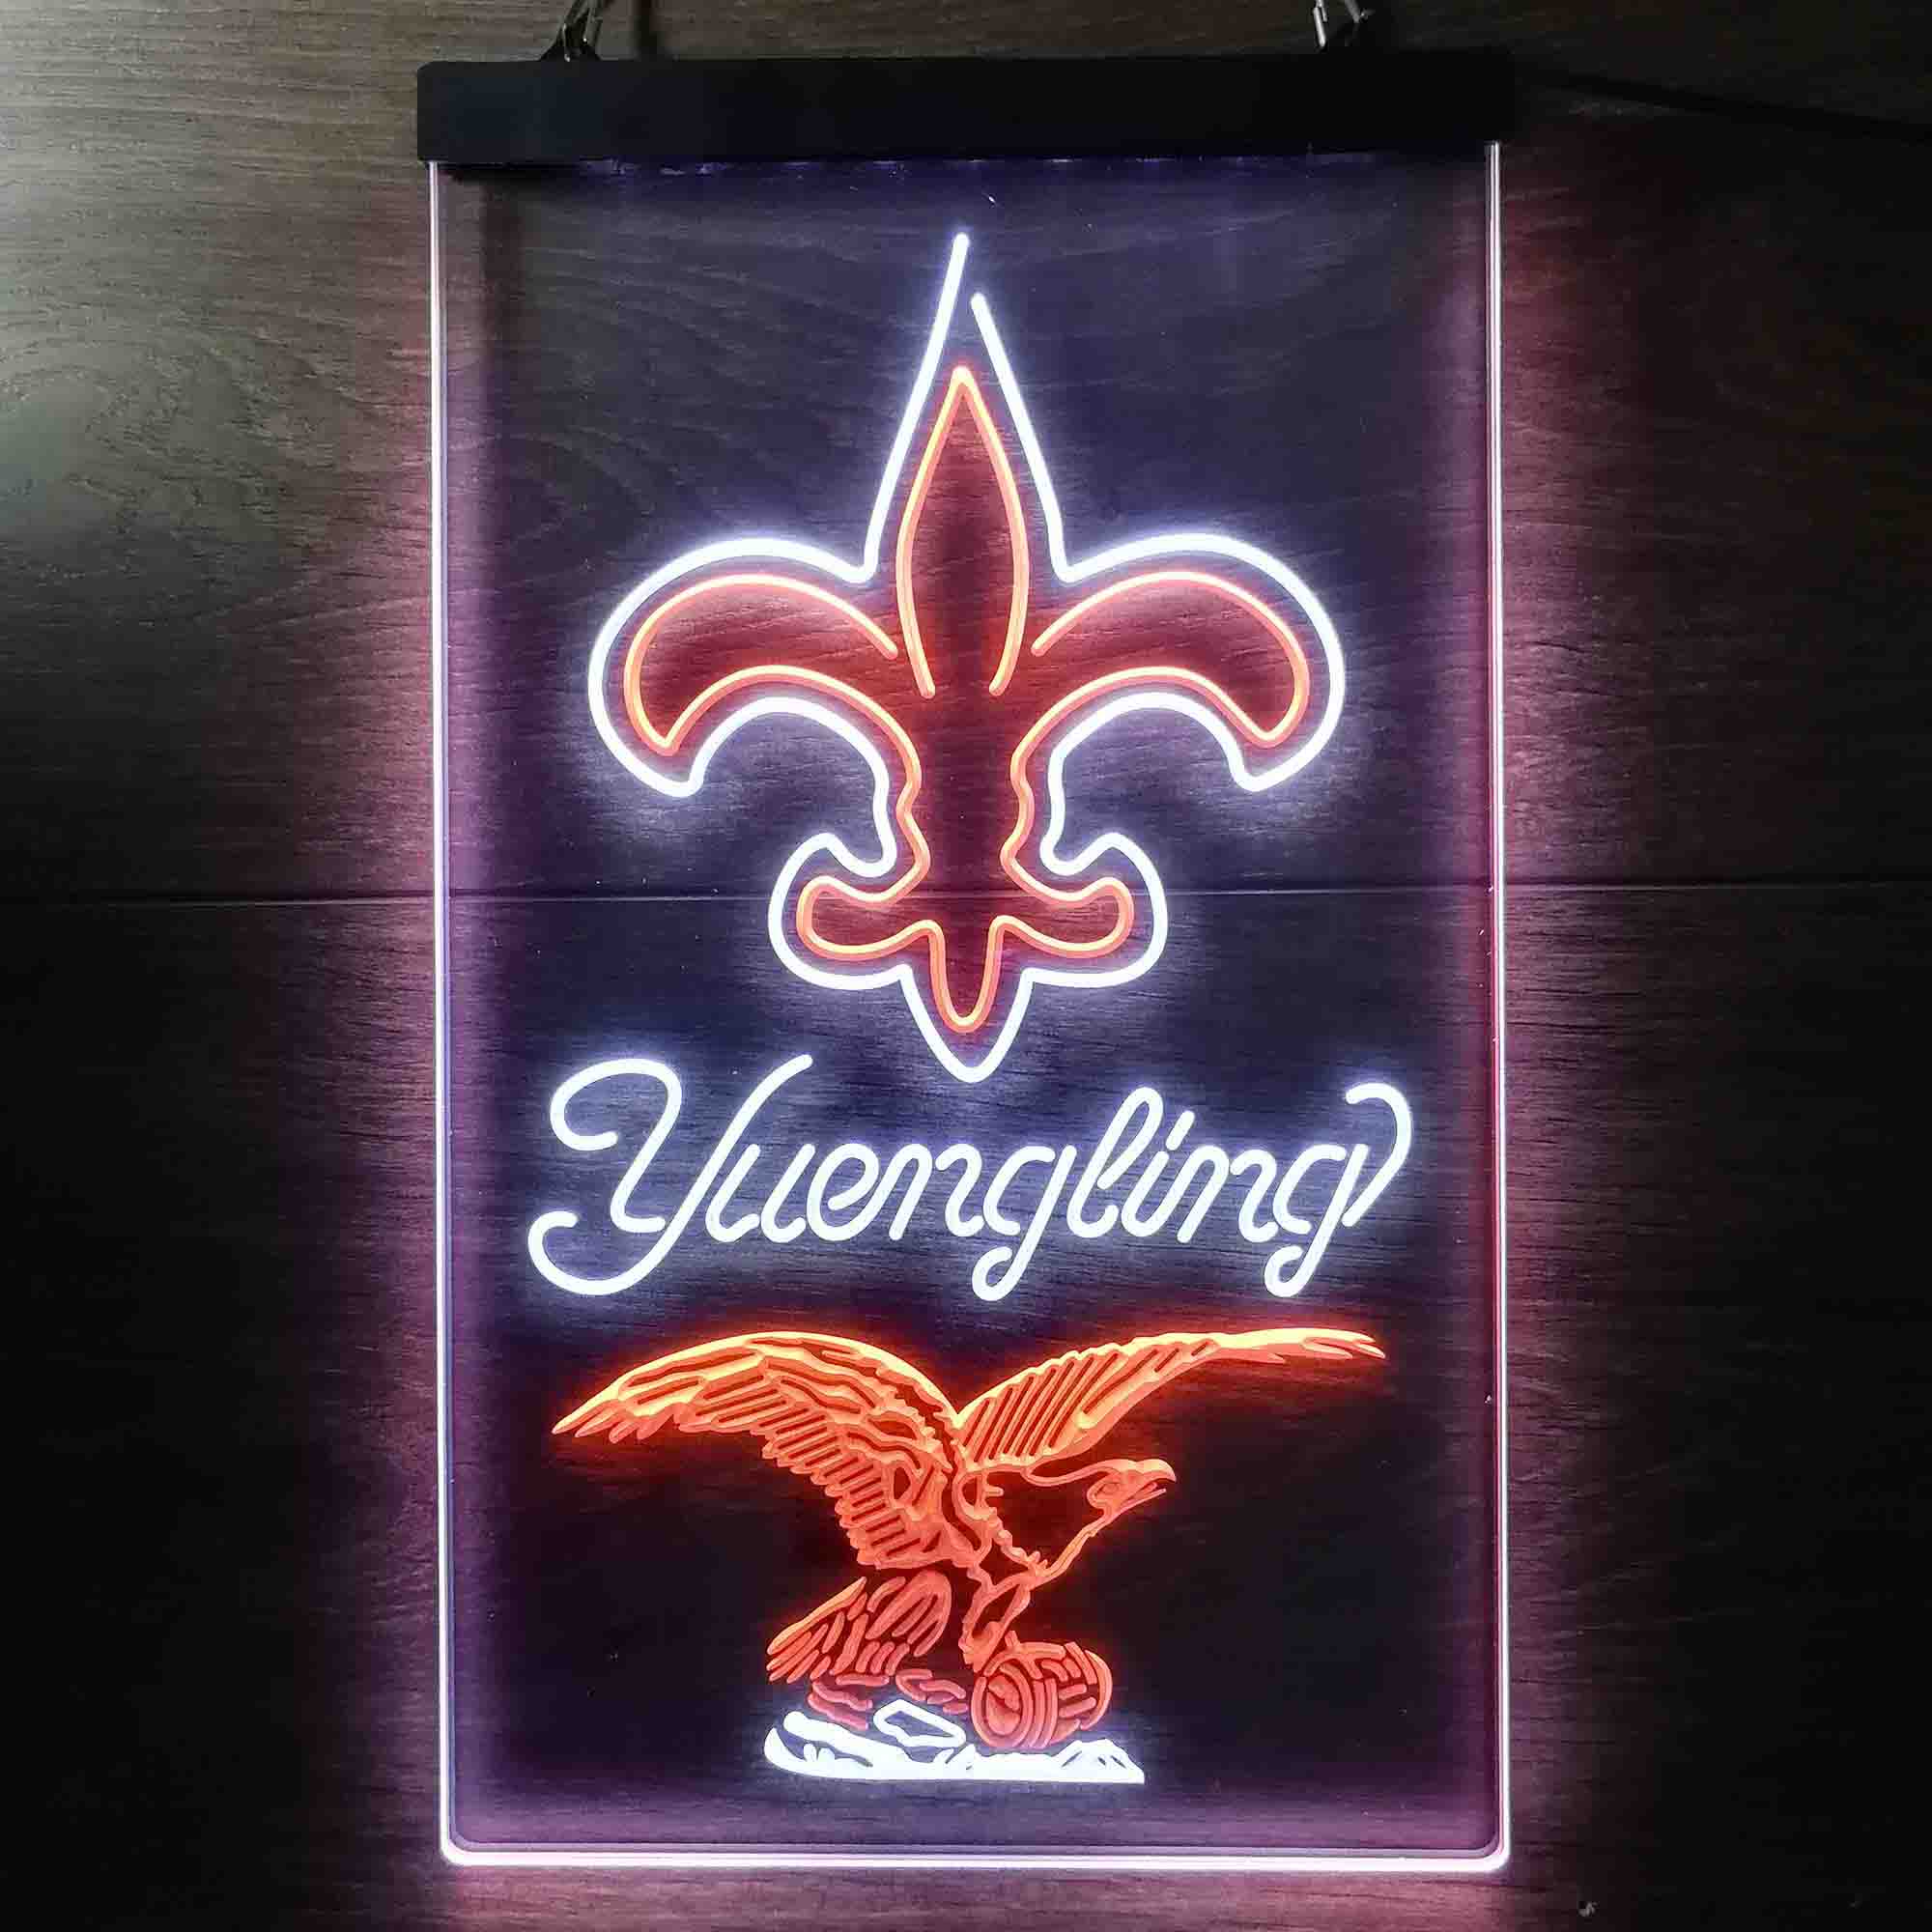 Yuengling Bar New Orleans Saints Est. 1967 Neon-Like LED Sign